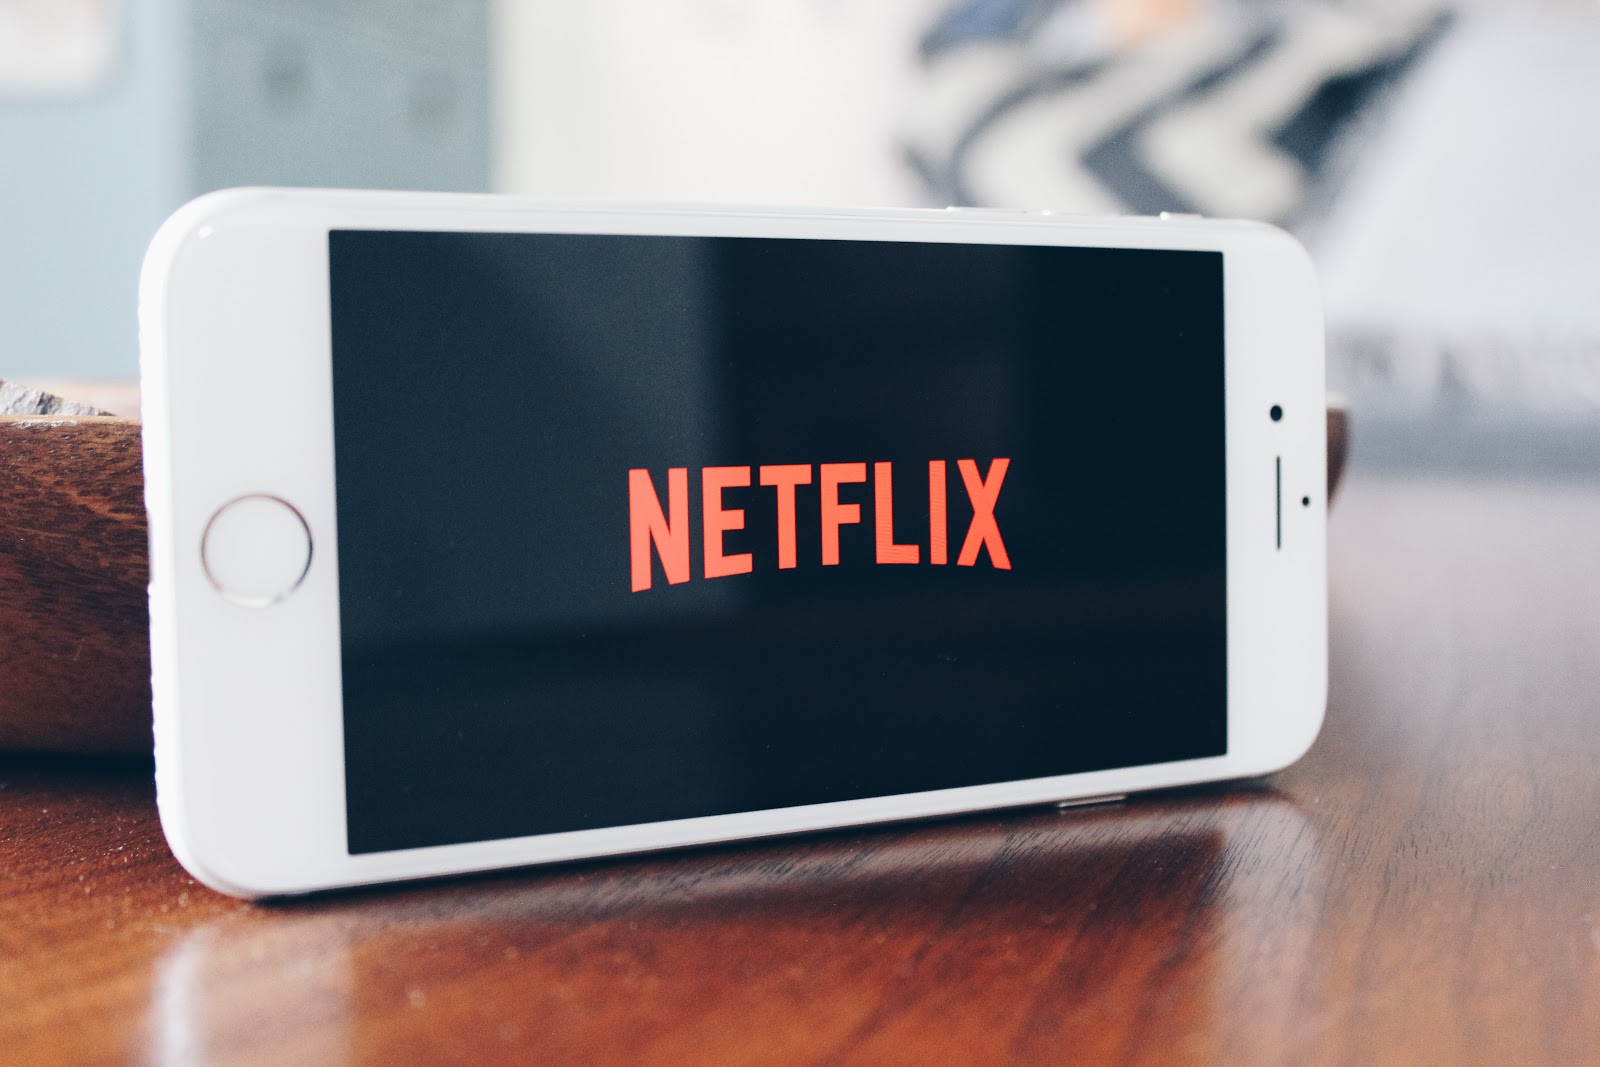 iPhone turned sideways with Netflix logo on screen 